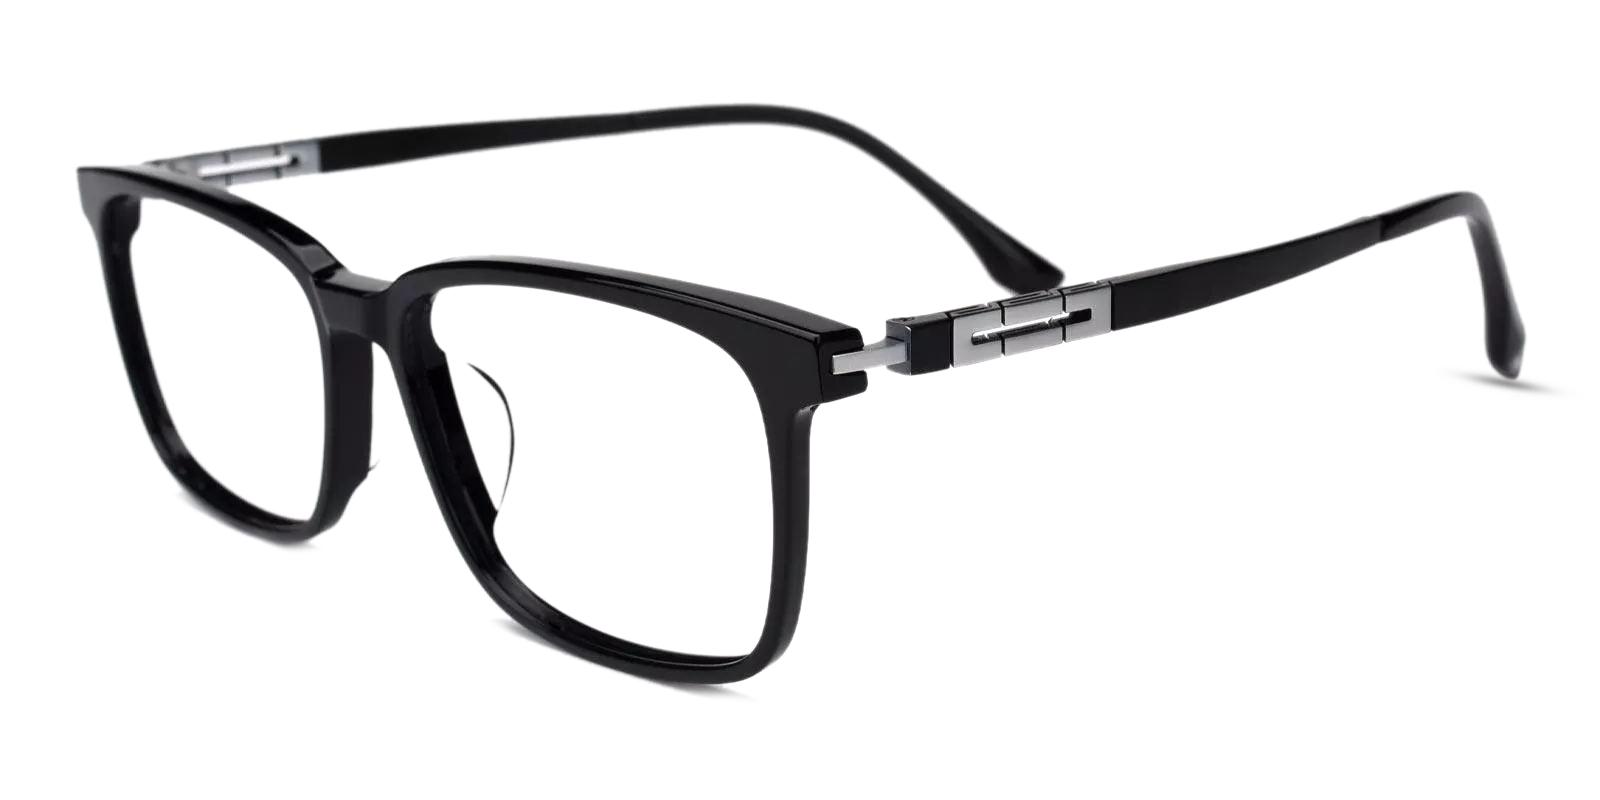 Unique Black Combination Eyeglasses , Fashion , SpringHinges , UniversalBridgeFit Frames from ABBE Glasses